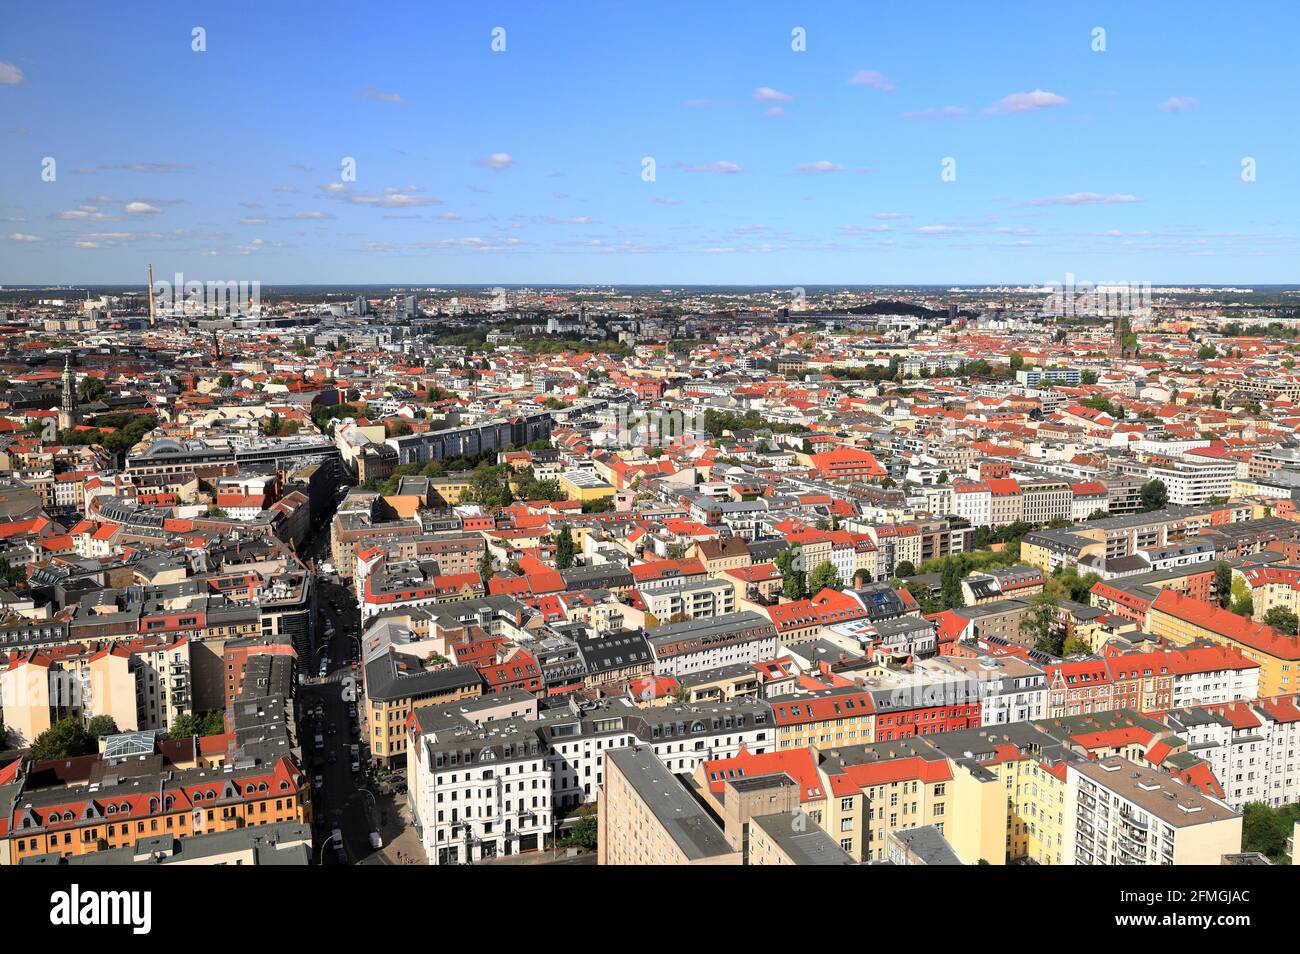 Berlin - aerial view. Germany, Europe. Stock Photo